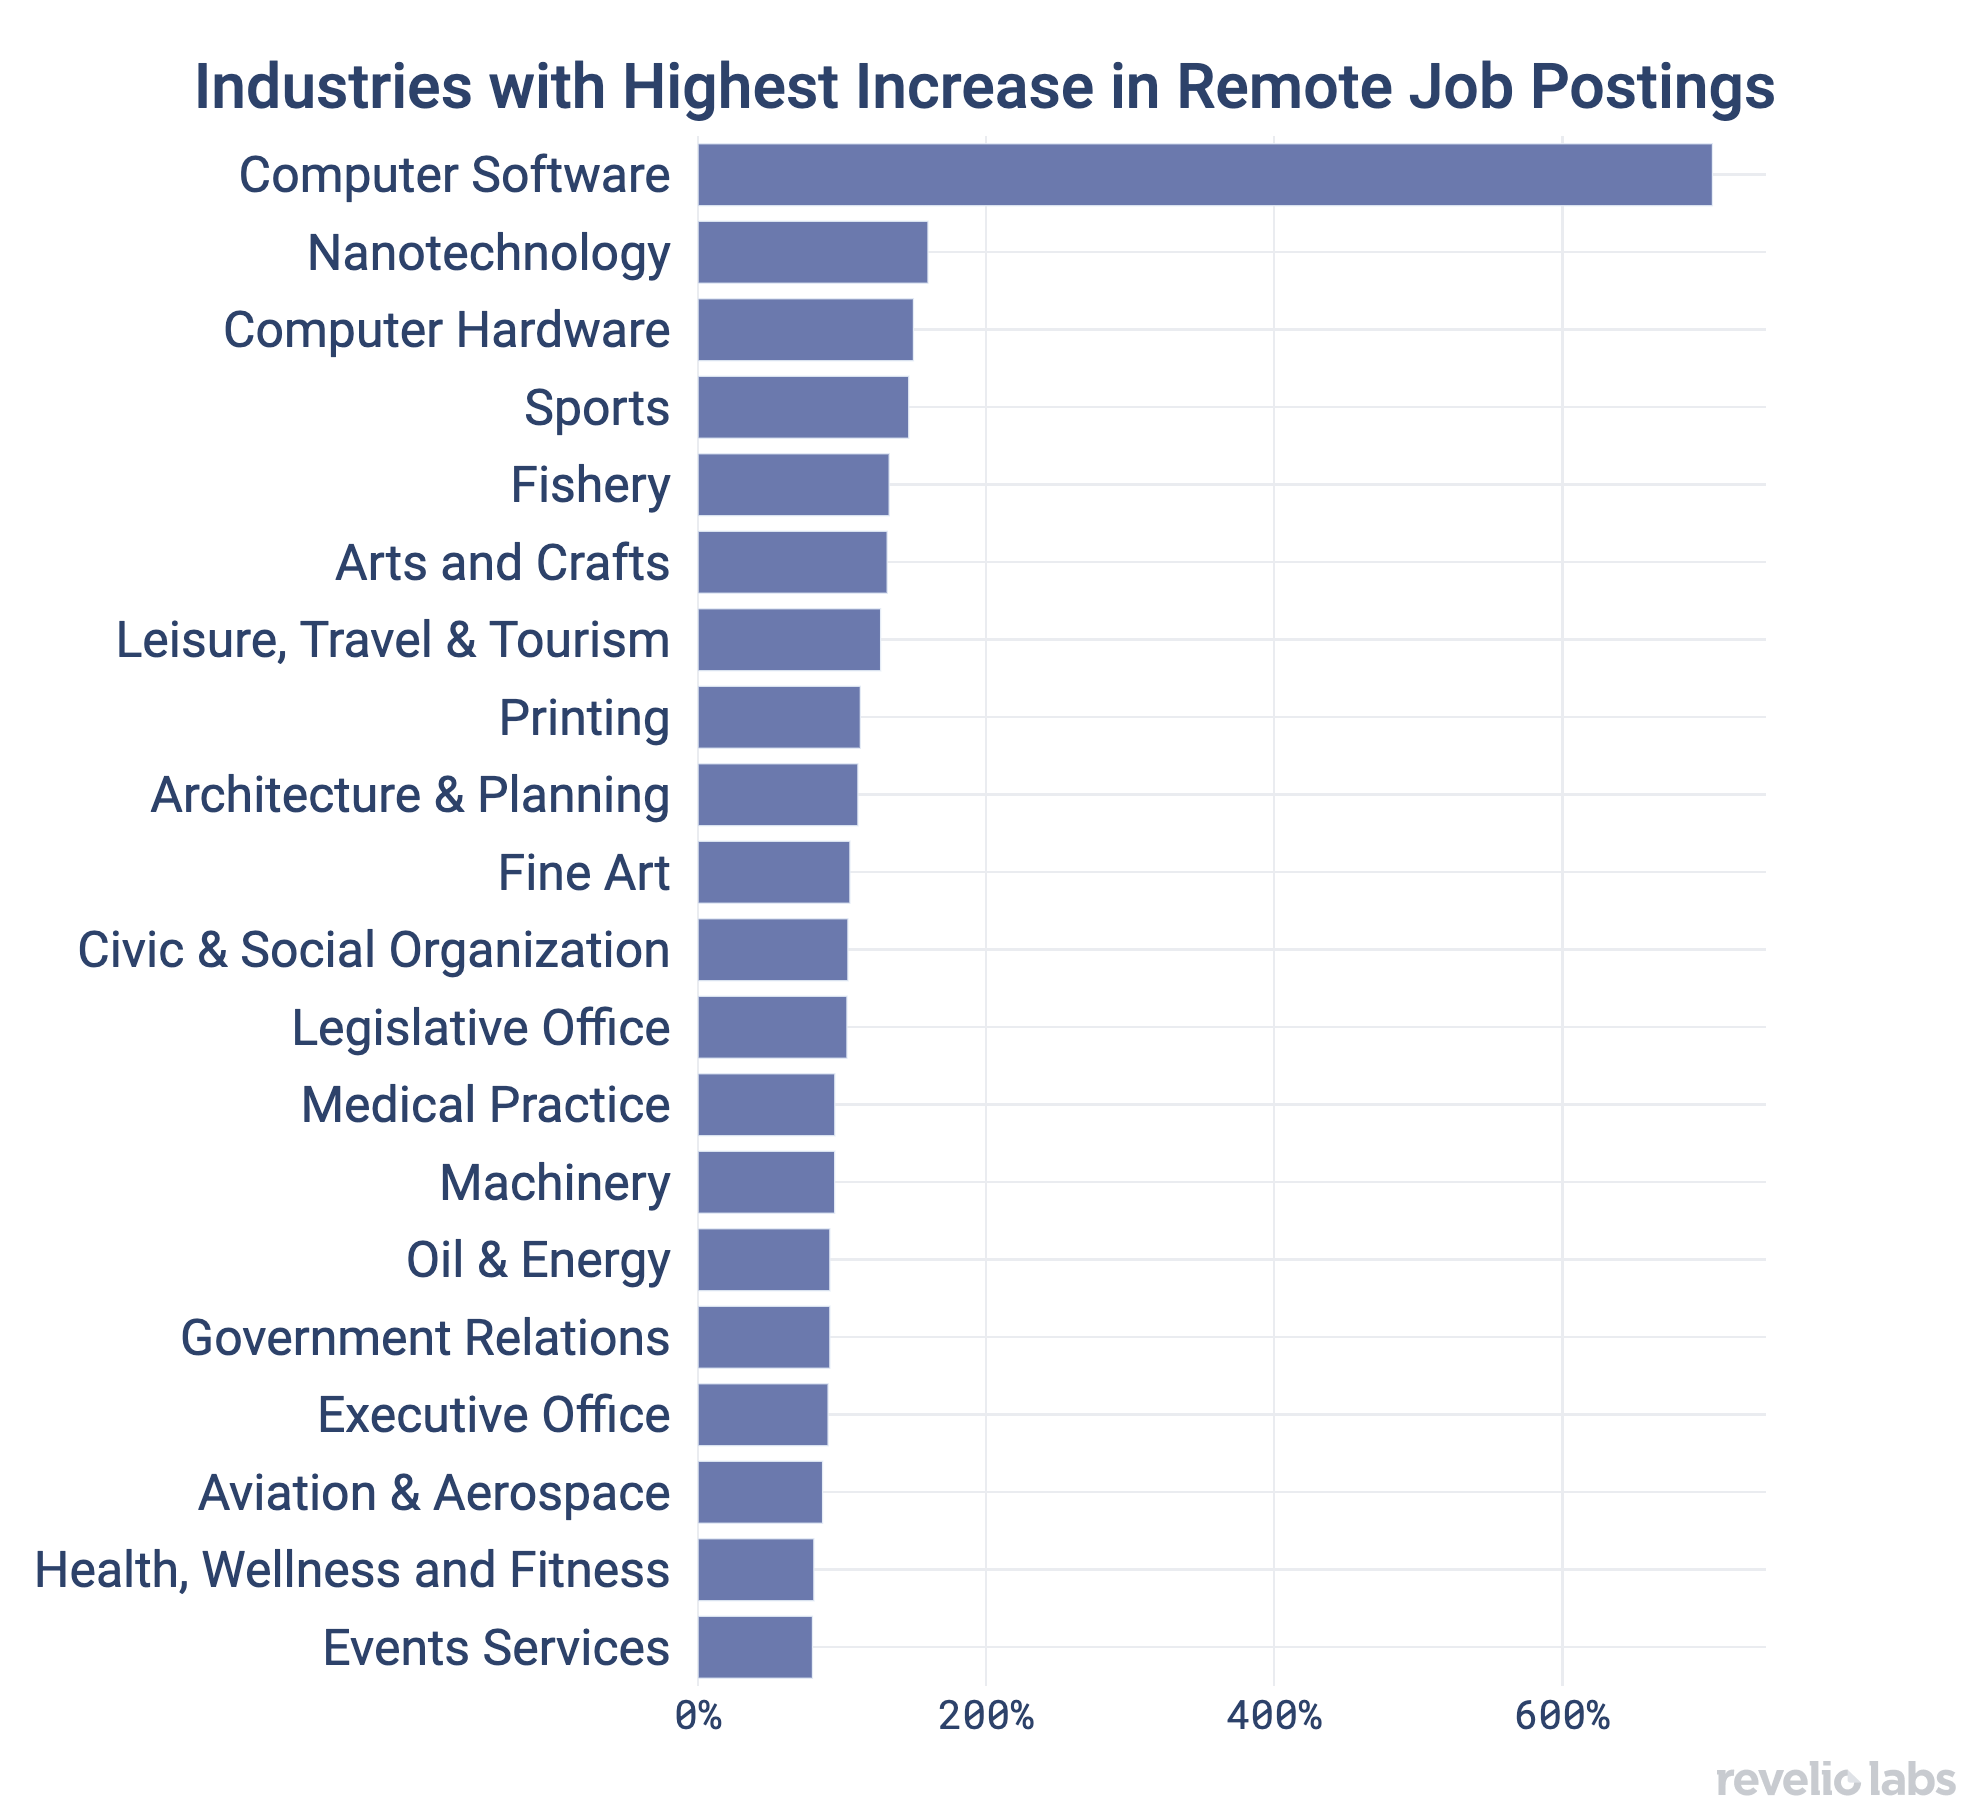 Industries with Highest Increase in Remote Job Postings